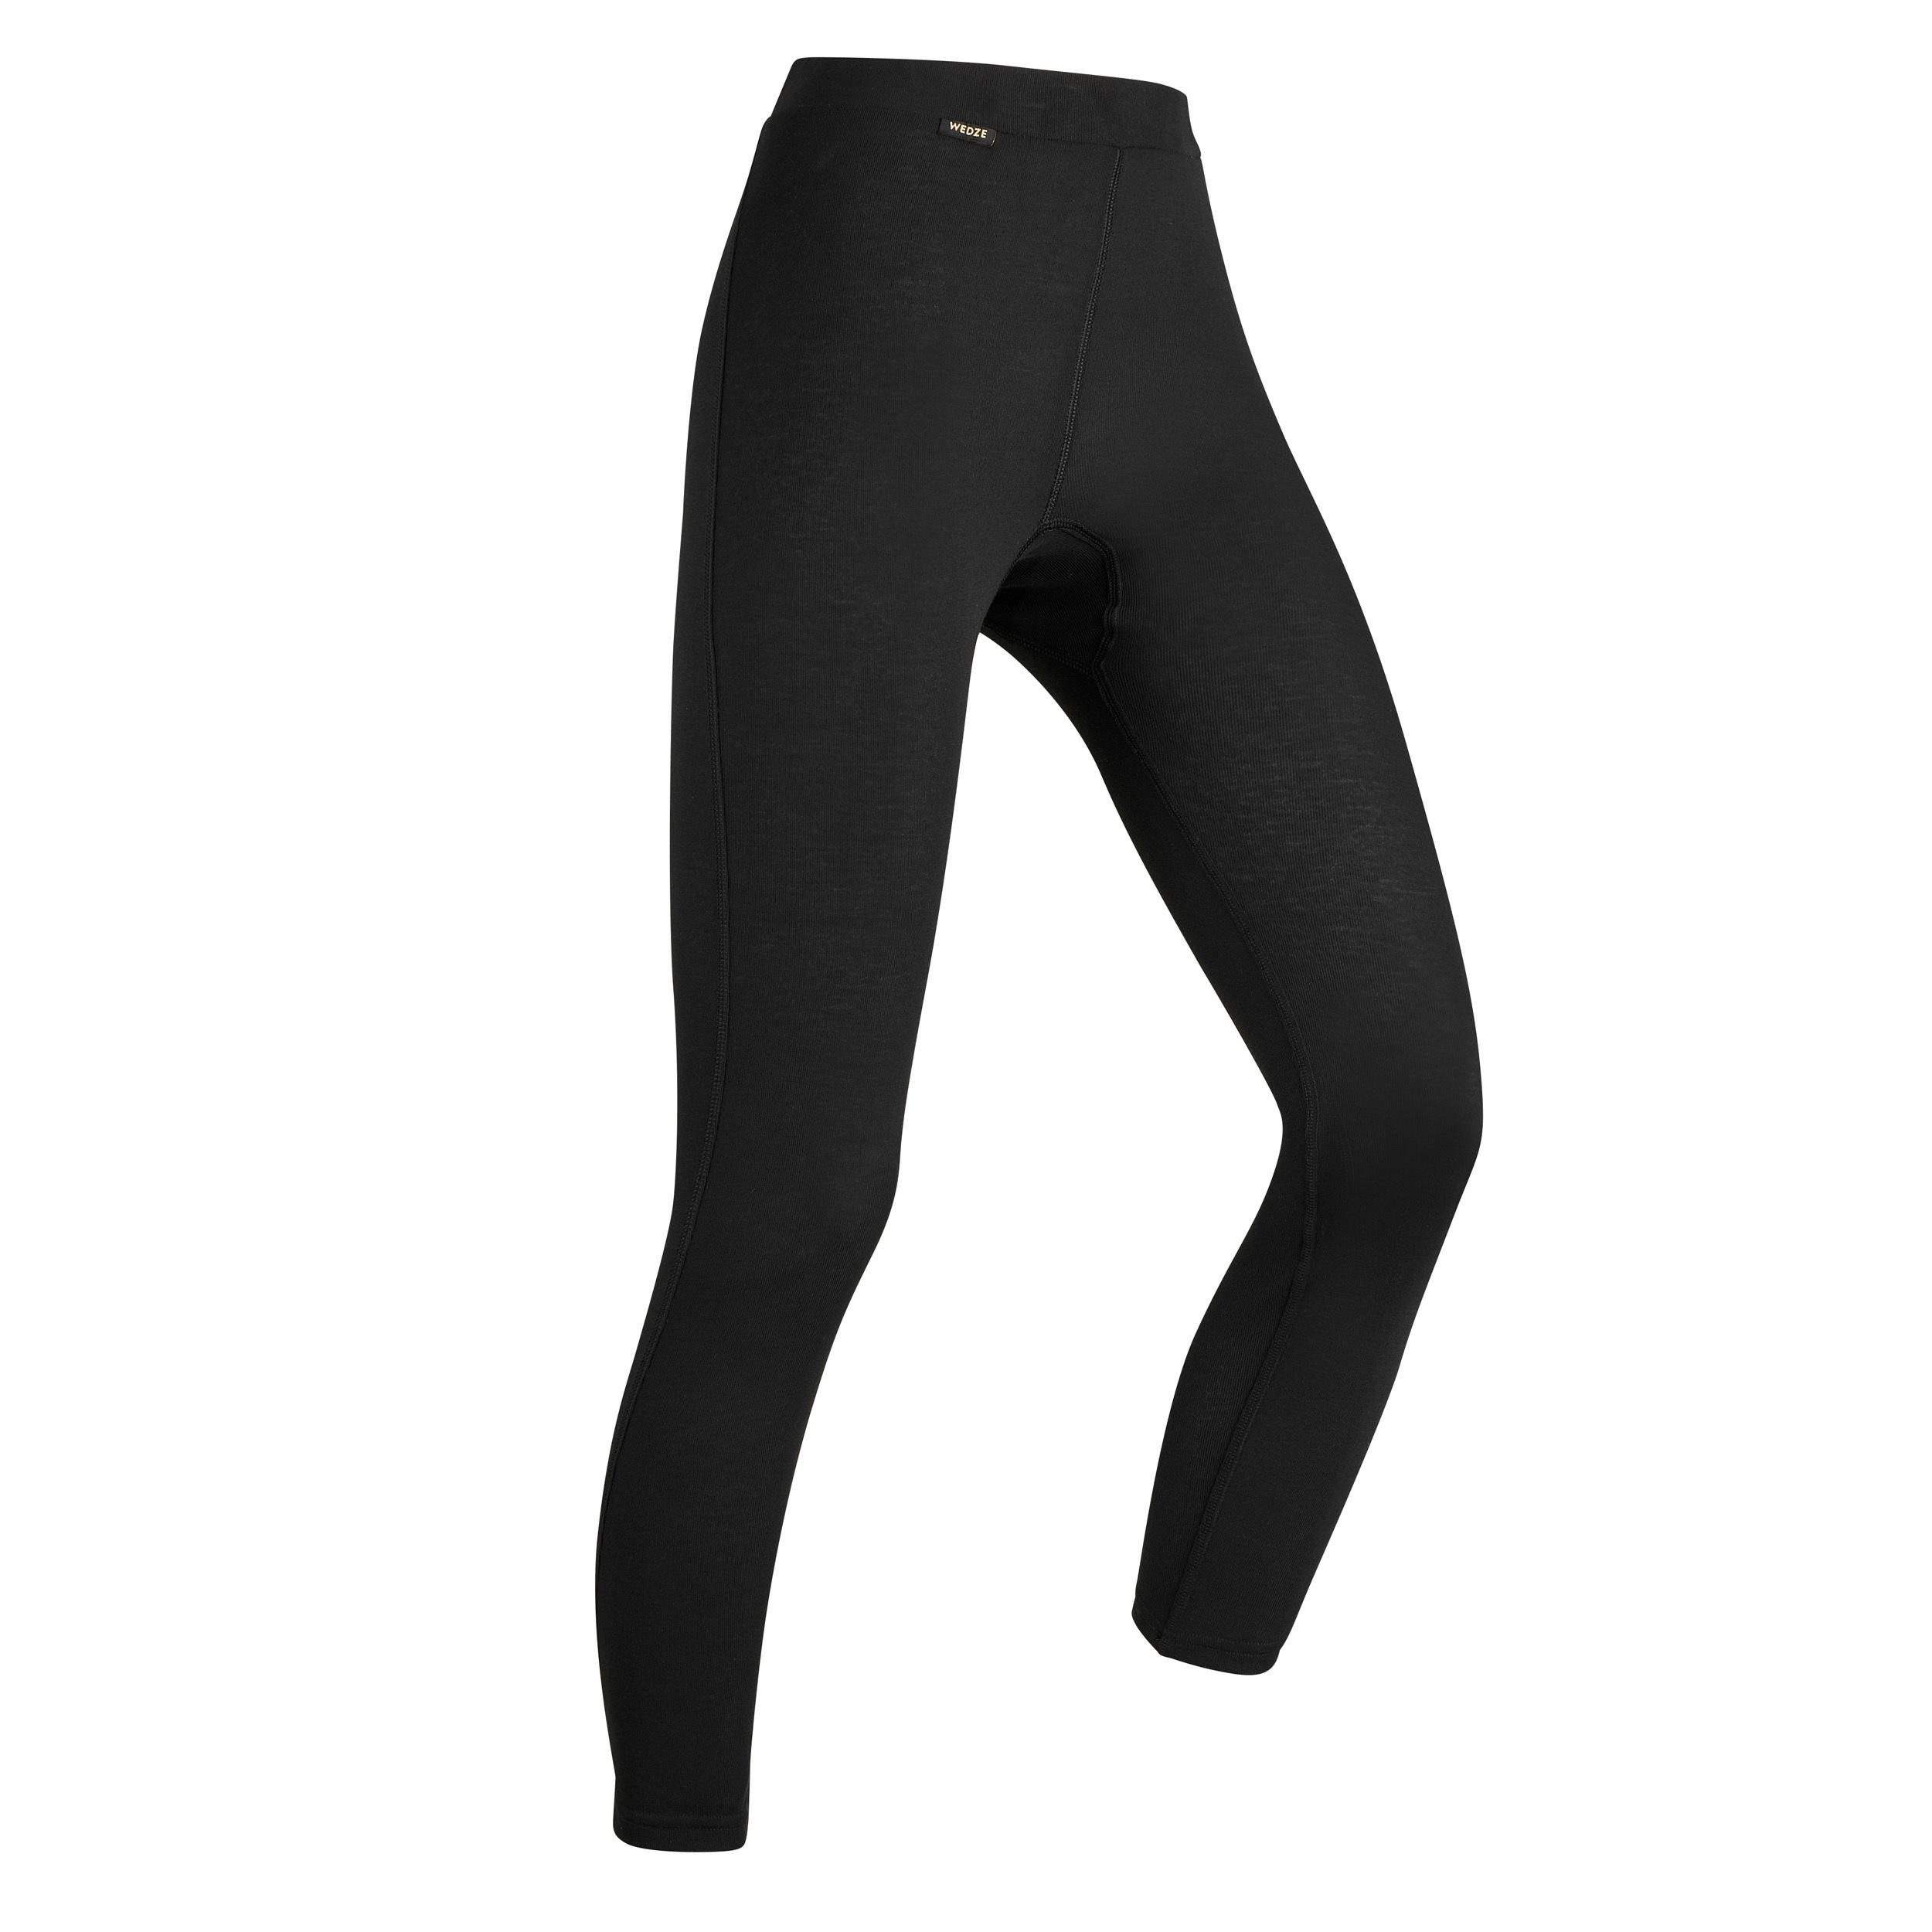 Decathlon Women's Ski Thermal Wear Base Layer Pants Bottom 500 - Black XS,  Women's Fashion, Bottoms, Other Bottoms on Carousell